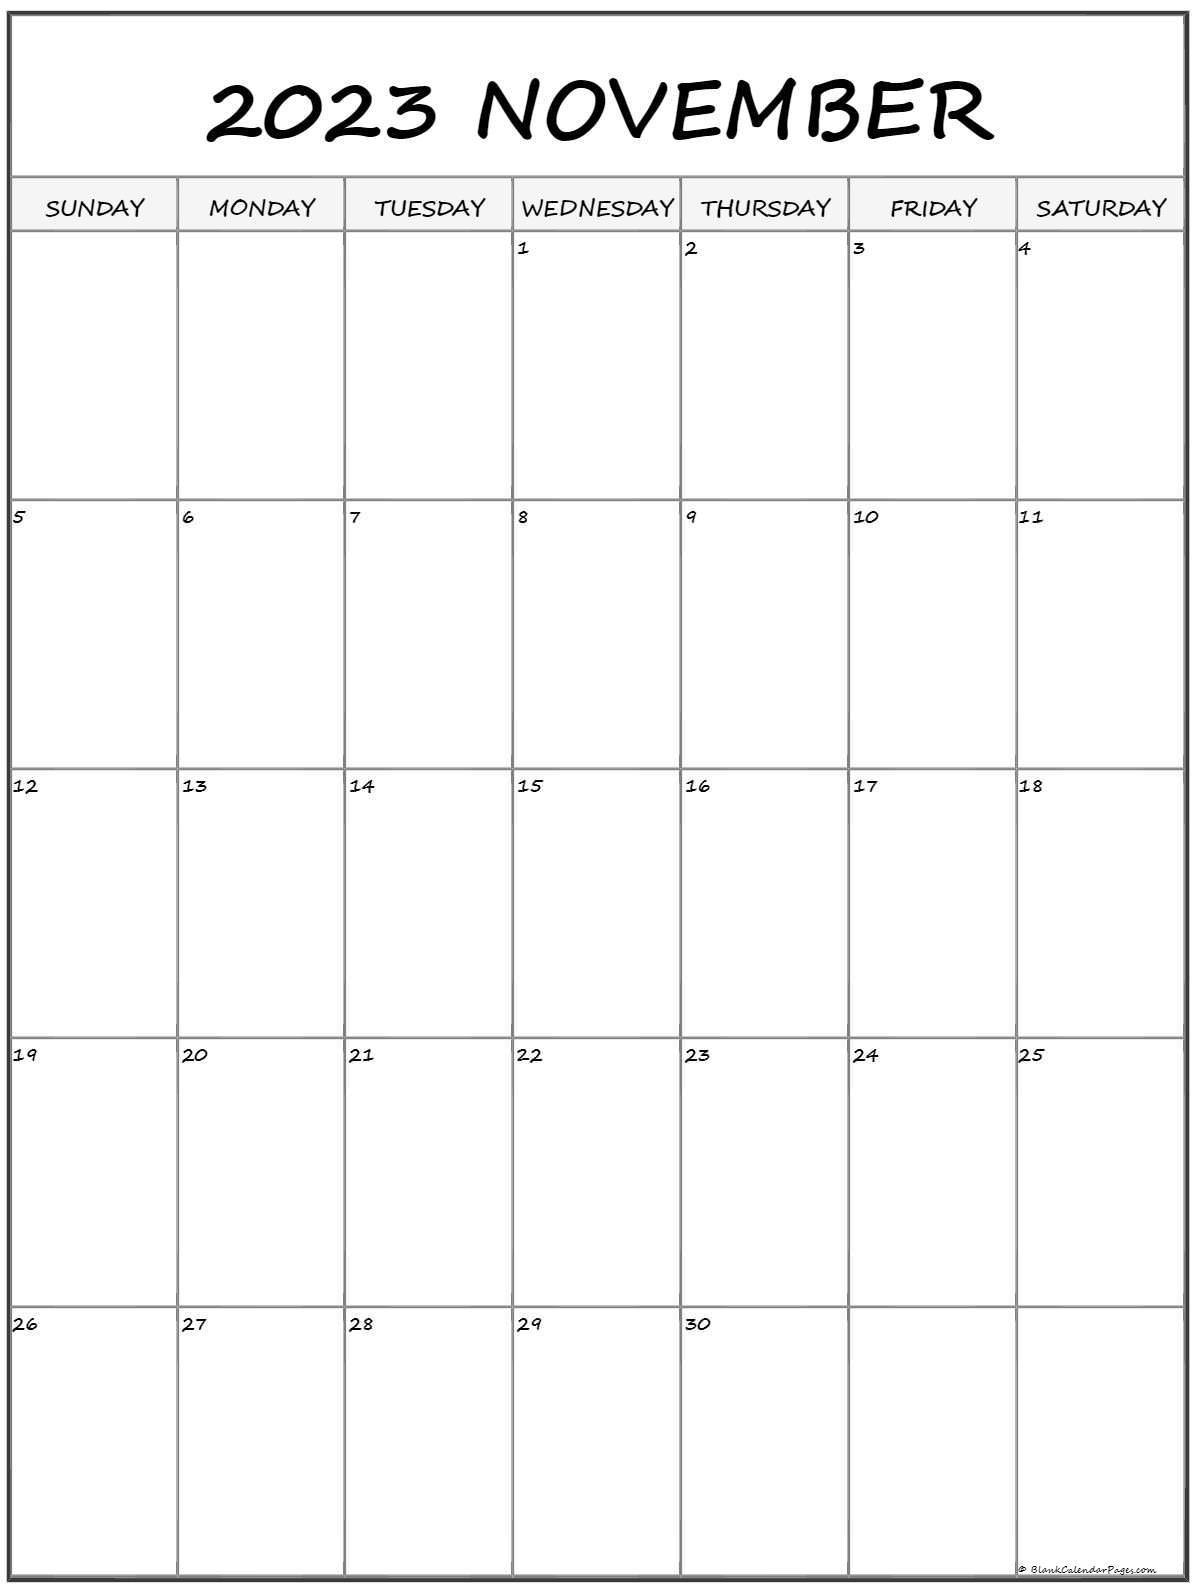 november-2023-vertical-calendar-portrait